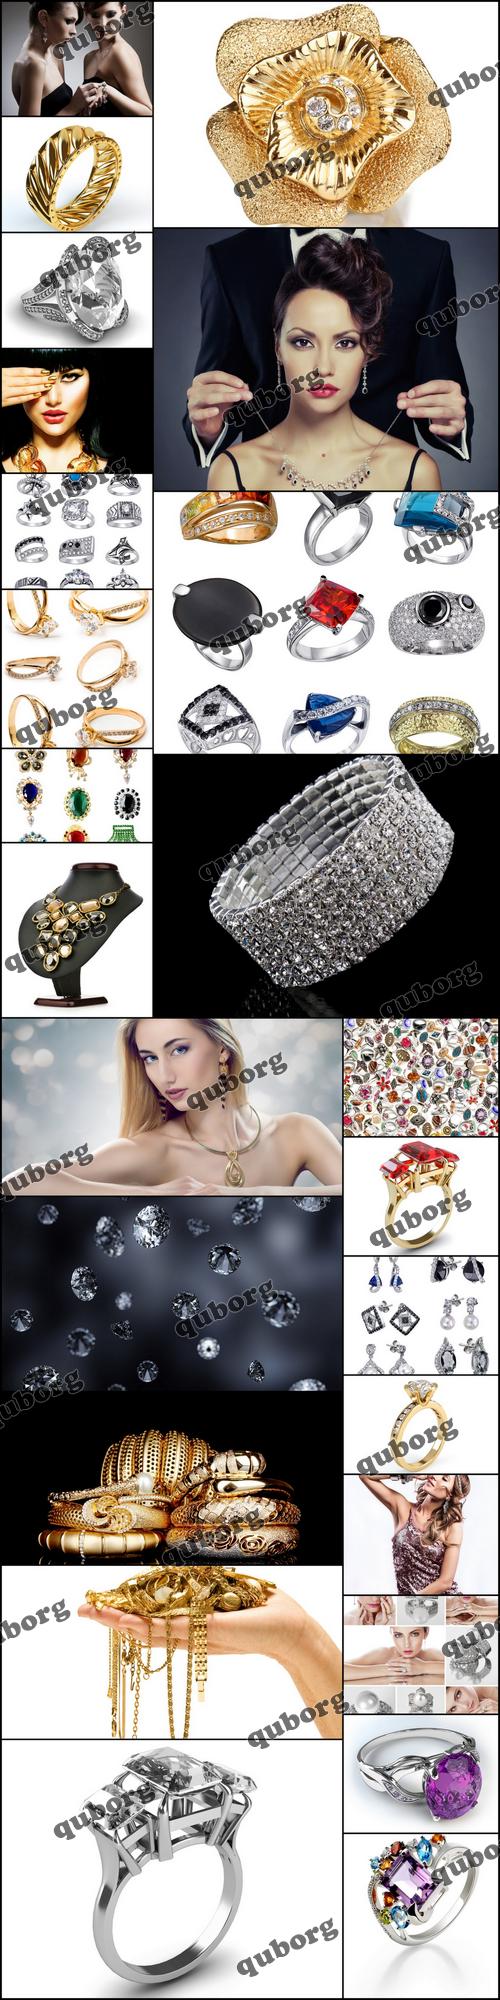 Stock Photos - Jewelry & Bijouterie 2